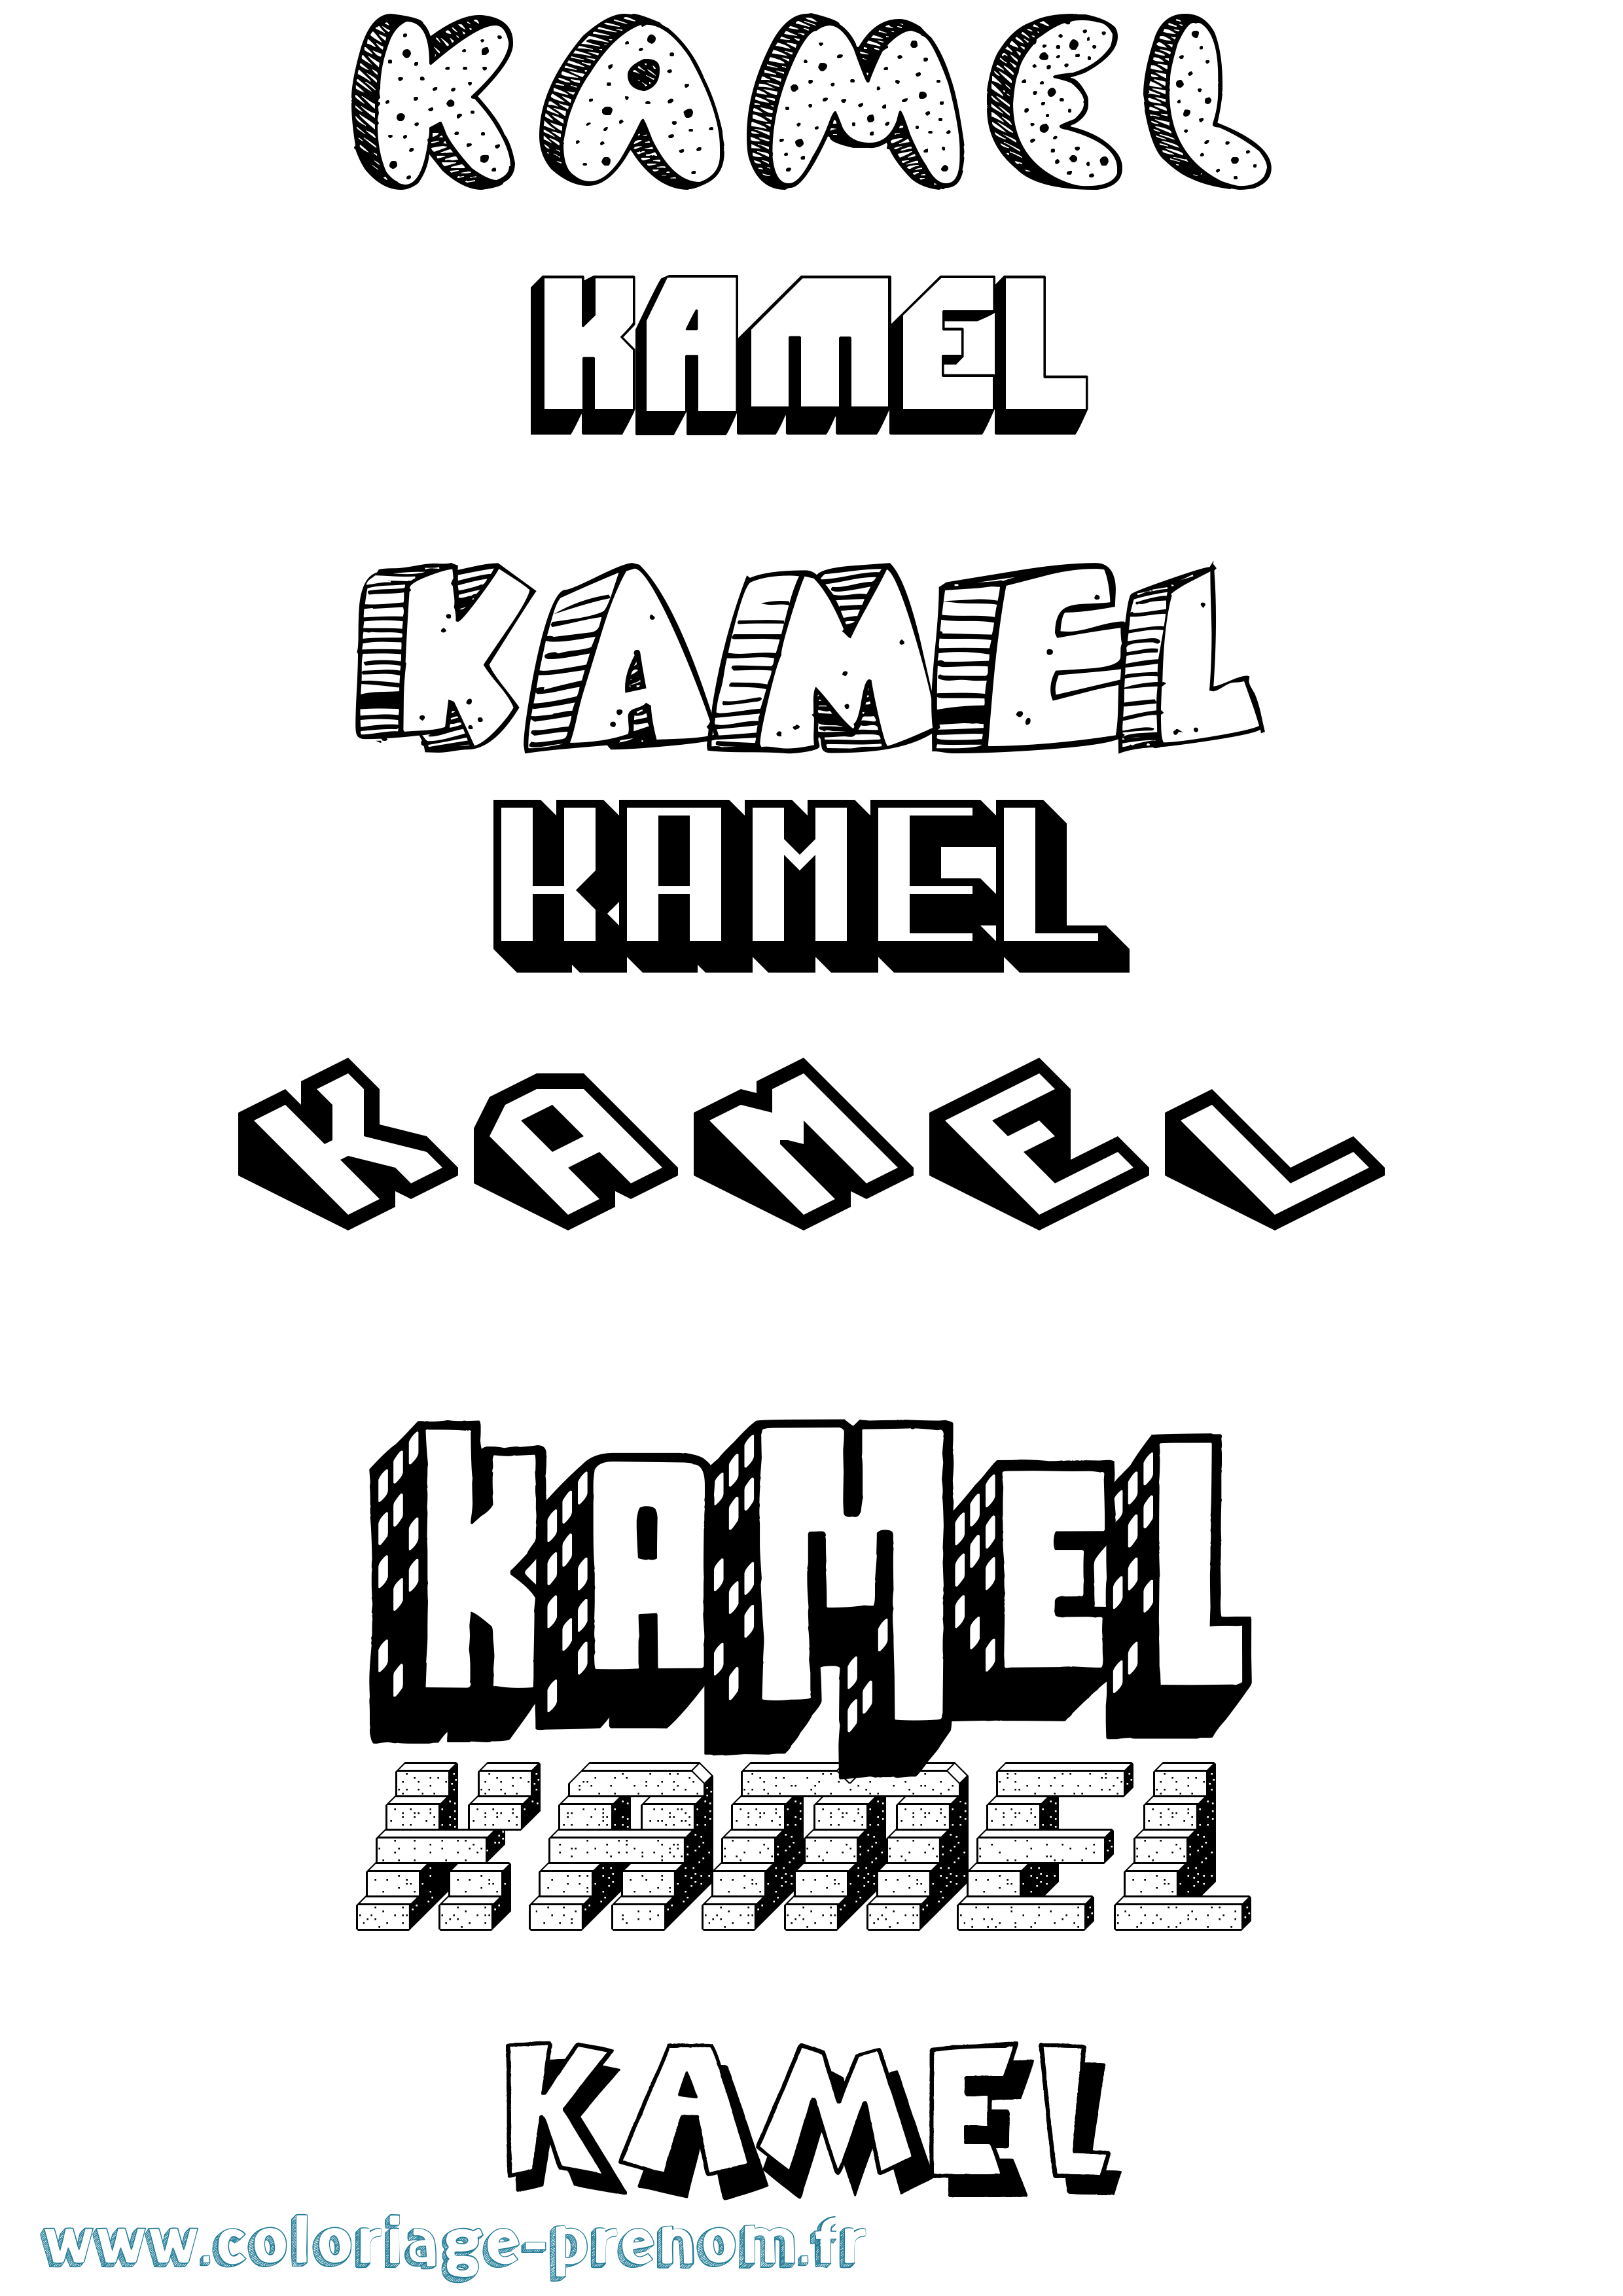 Coloriage prénom Kamel